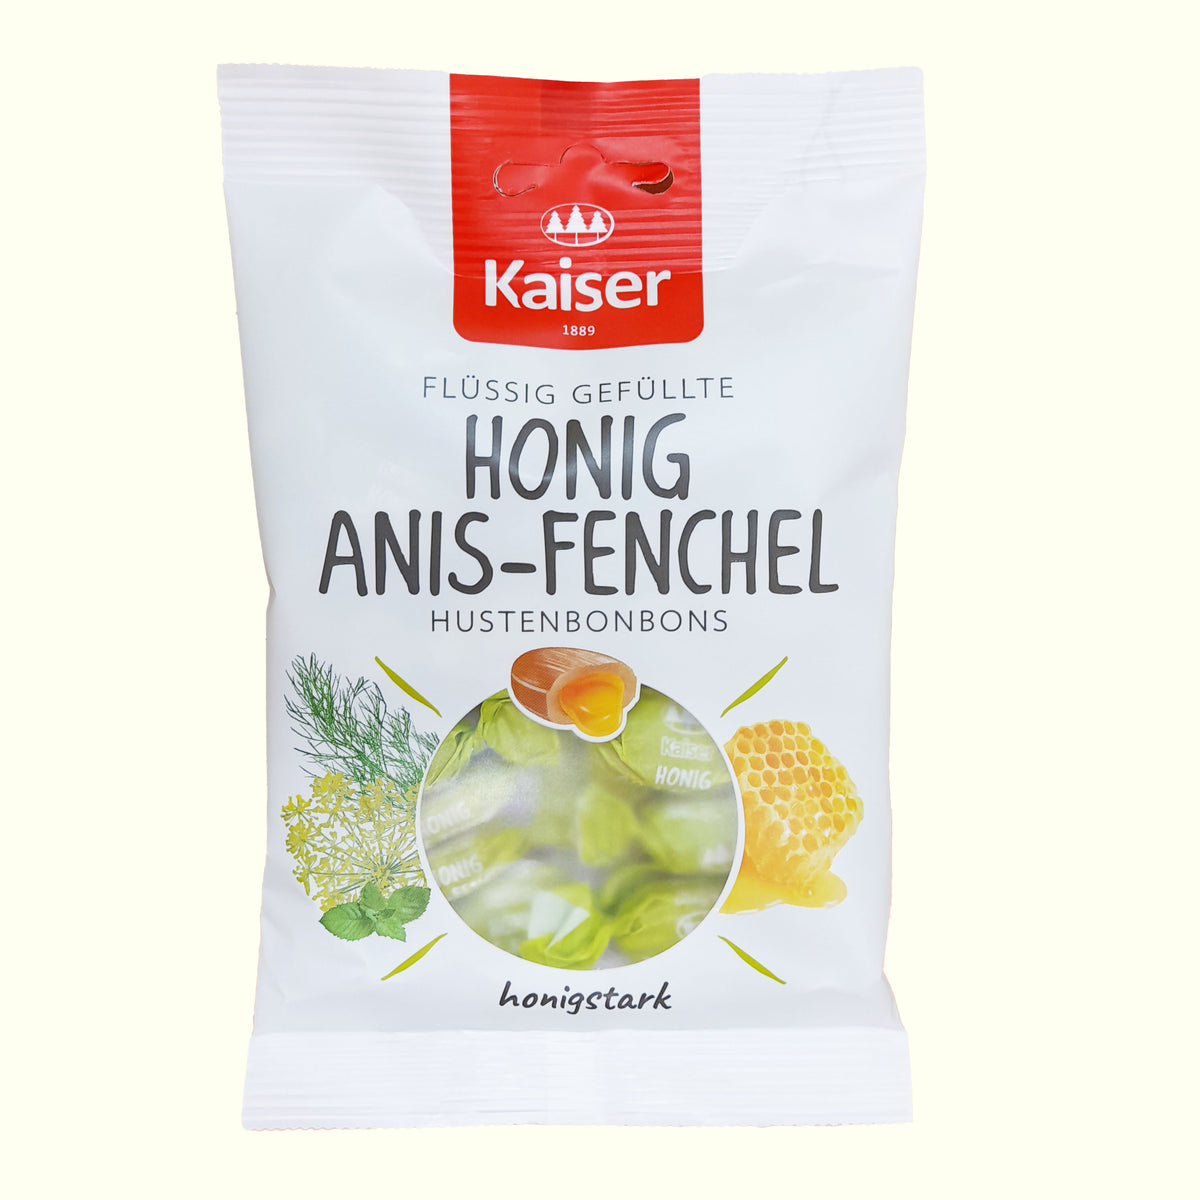 Kaiser Flüssig Gefüllte Honig Anis Fenchel Hustenbonbons - 90g